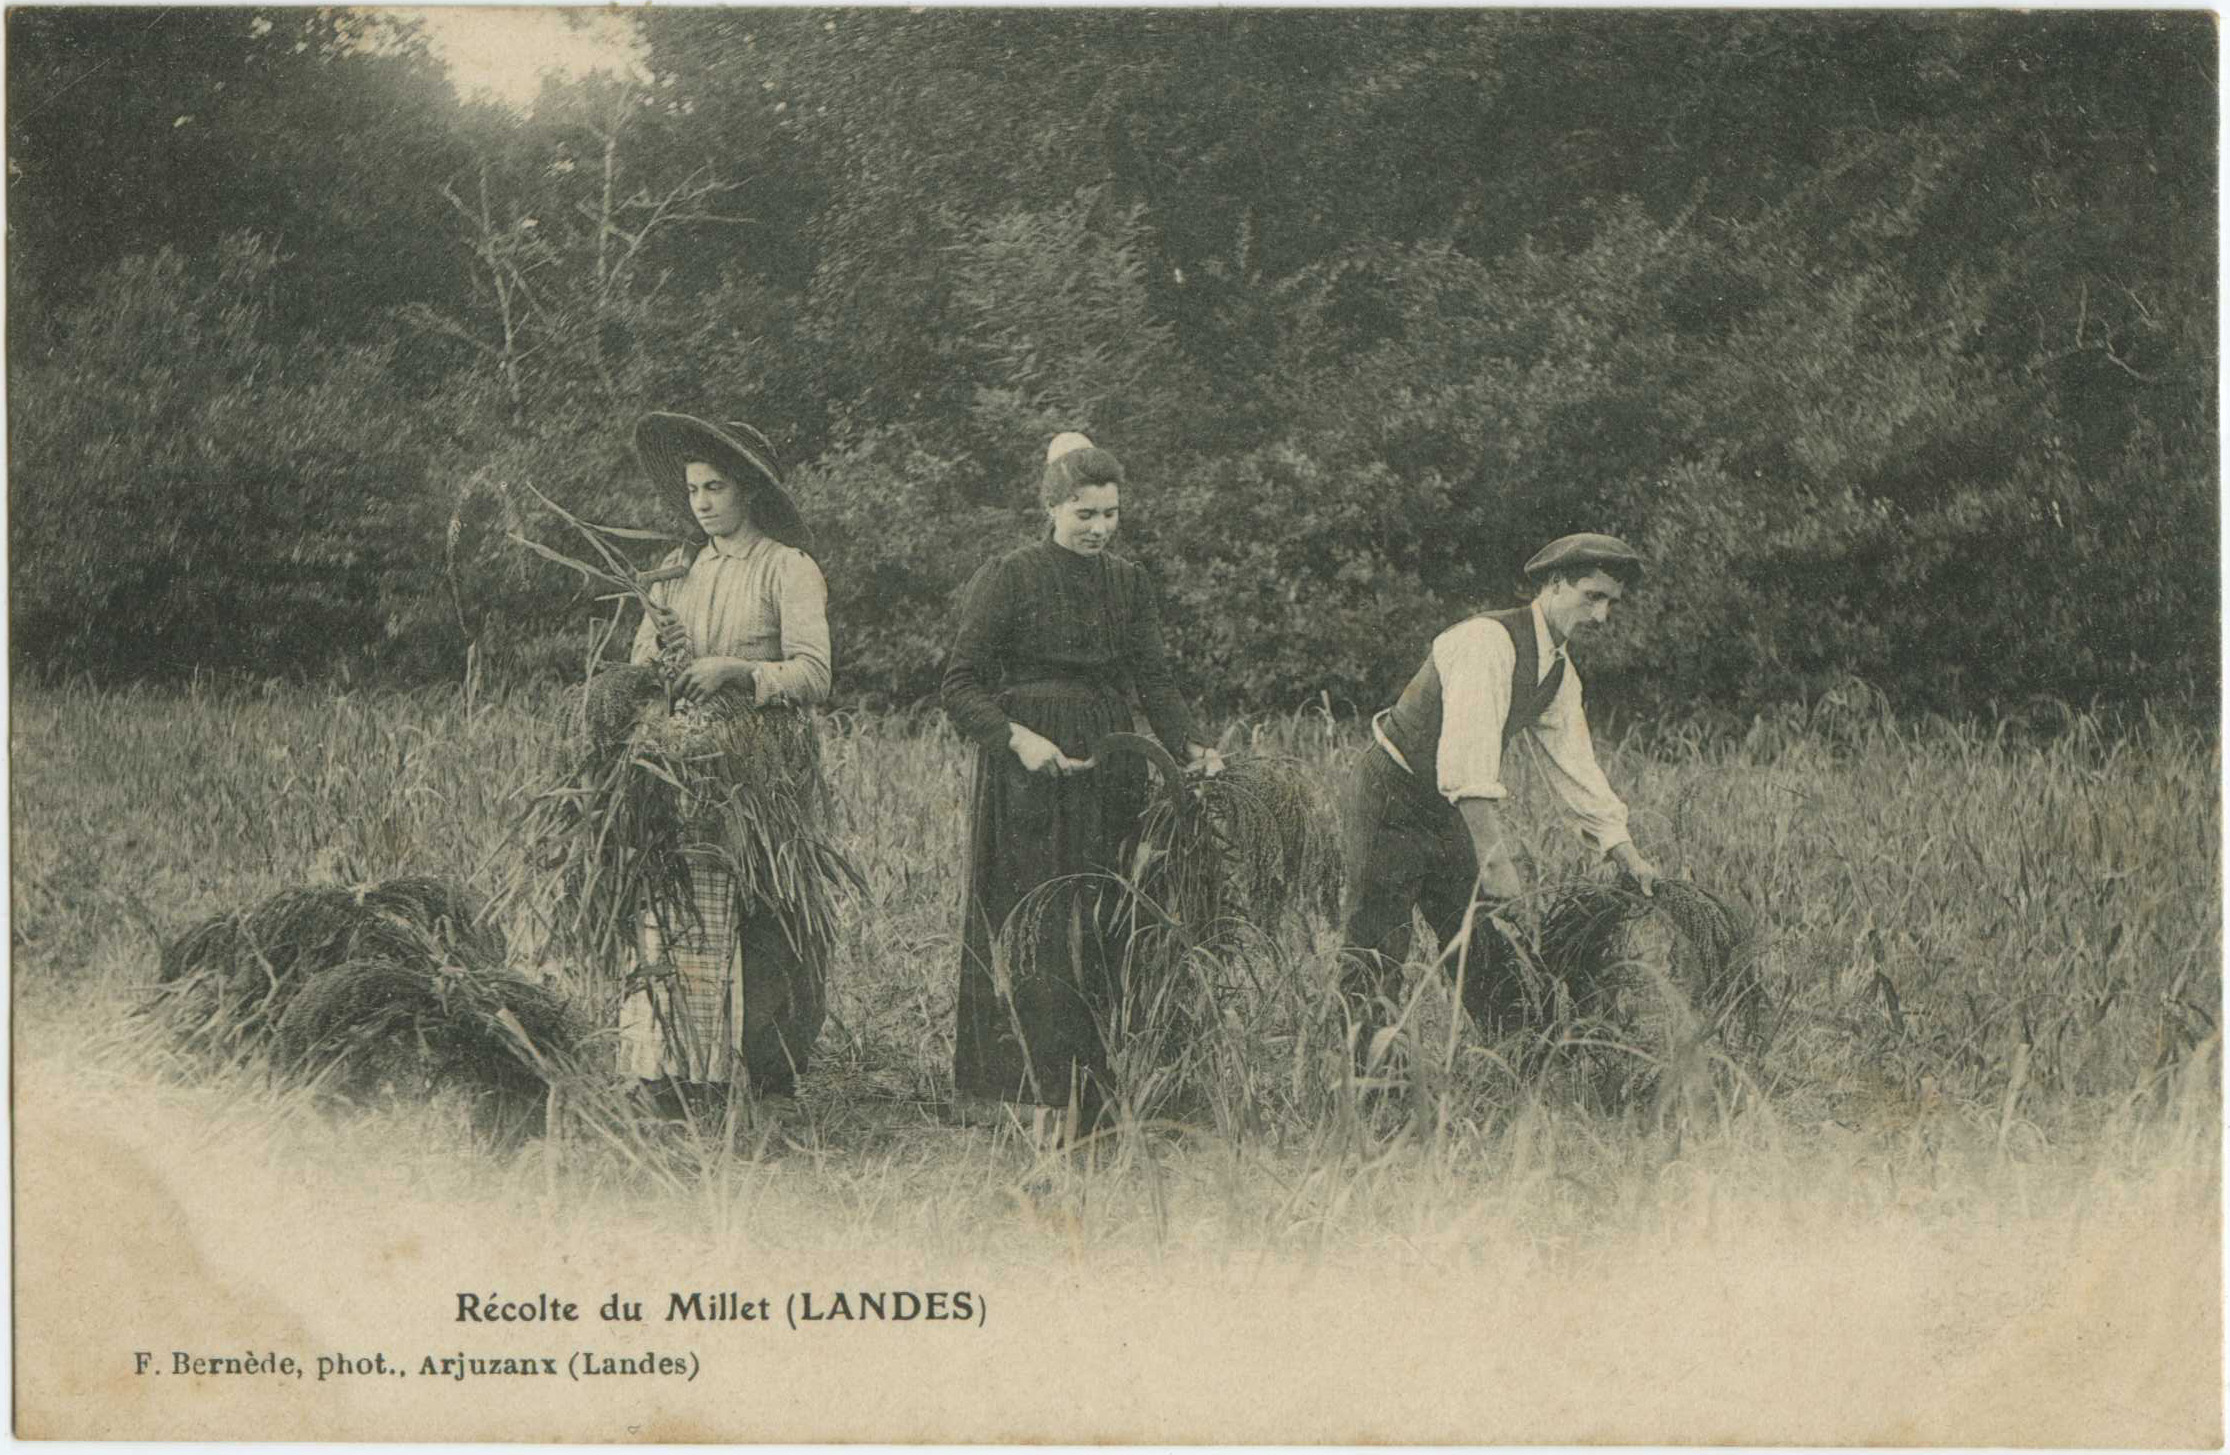 Landes - Récolte du Millet (LANDES)